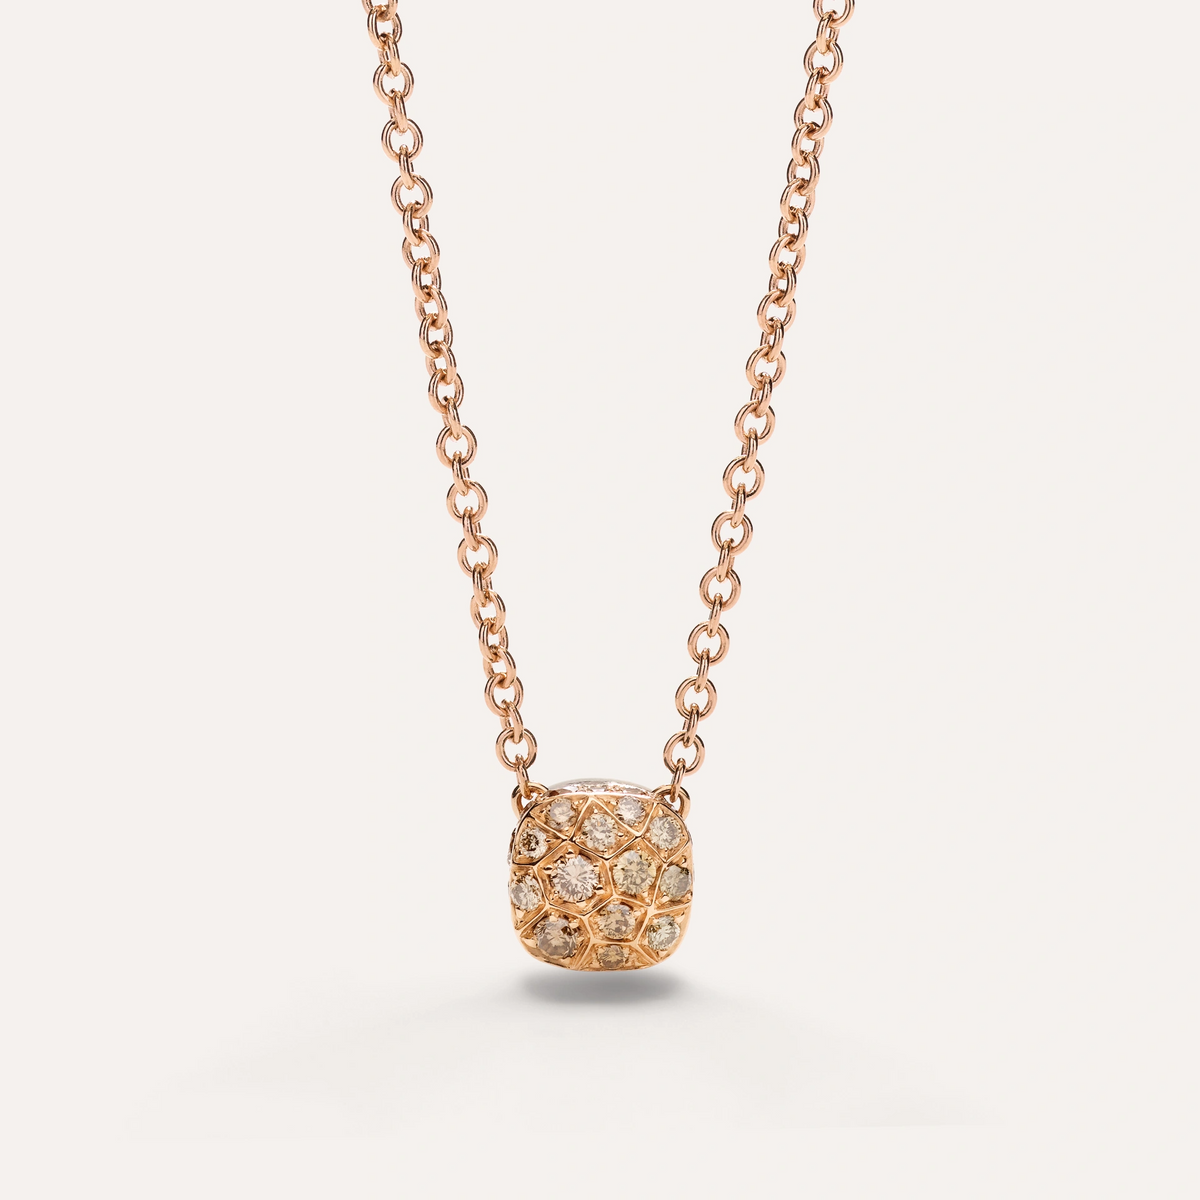 Pomellato Petit Nudo 18k Gold Necklace with Brown Diamonds - Orsini Jewellers